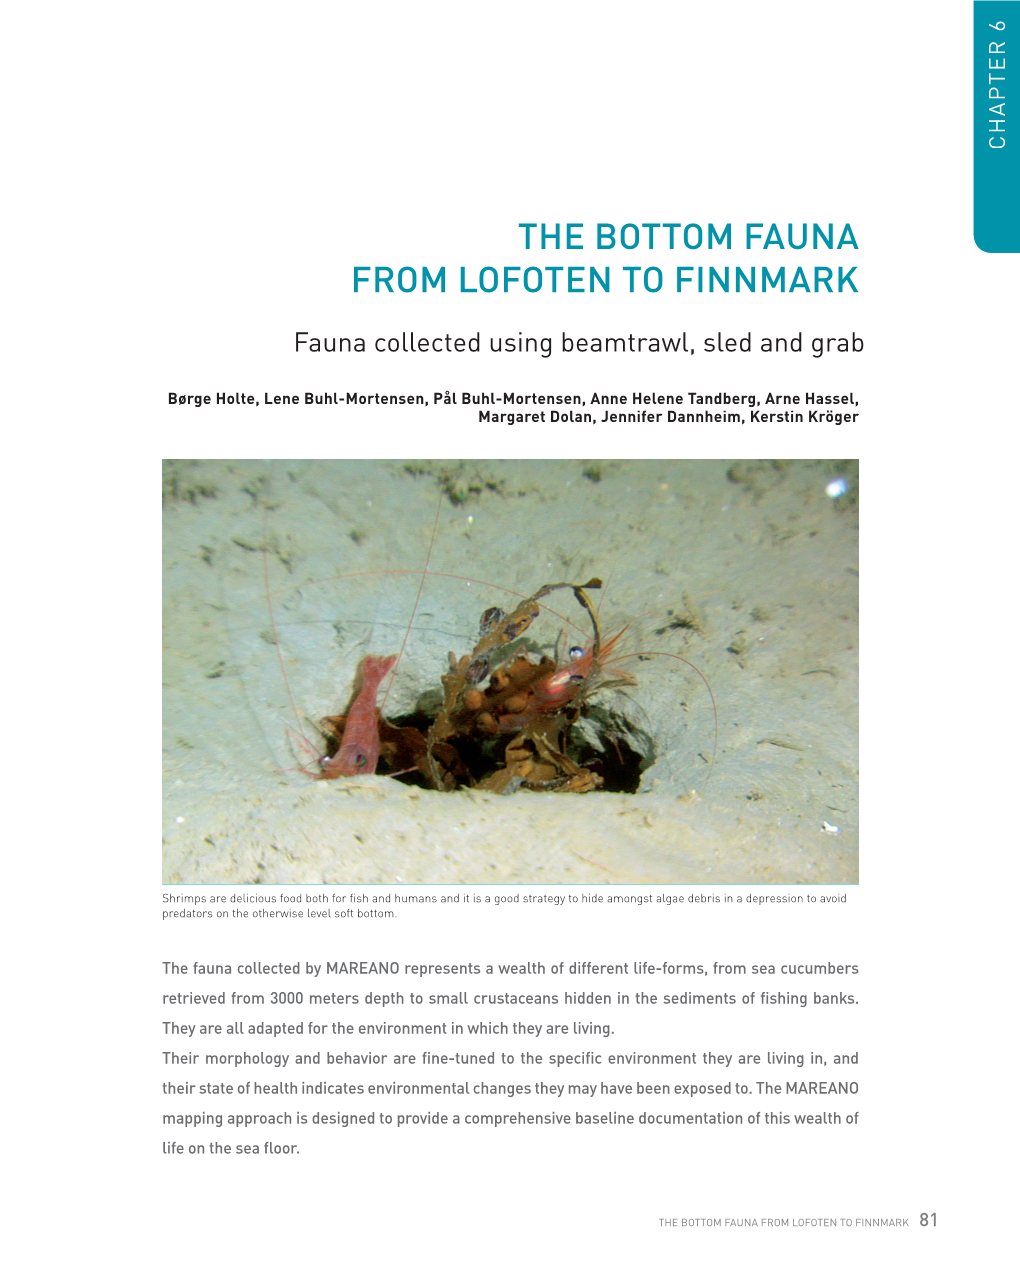 The Bottom Fauna from Lofoten to Finnmark